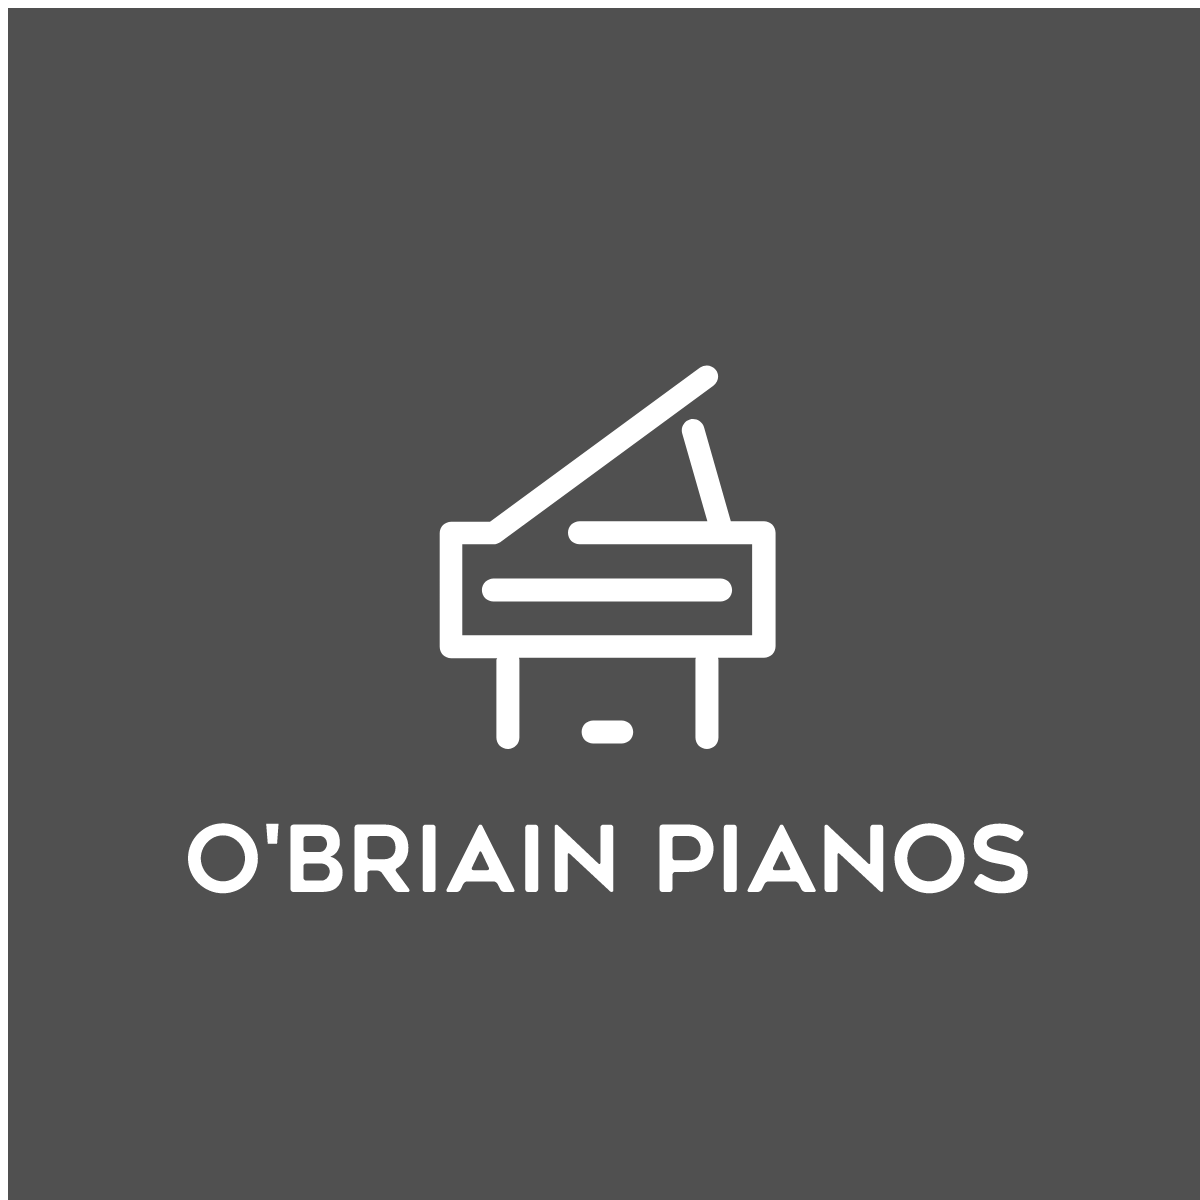 O'Briain Pianos |  New & Used Pianos for Sale | Lucan, Dublin, Ireland-O'Briain Pianos